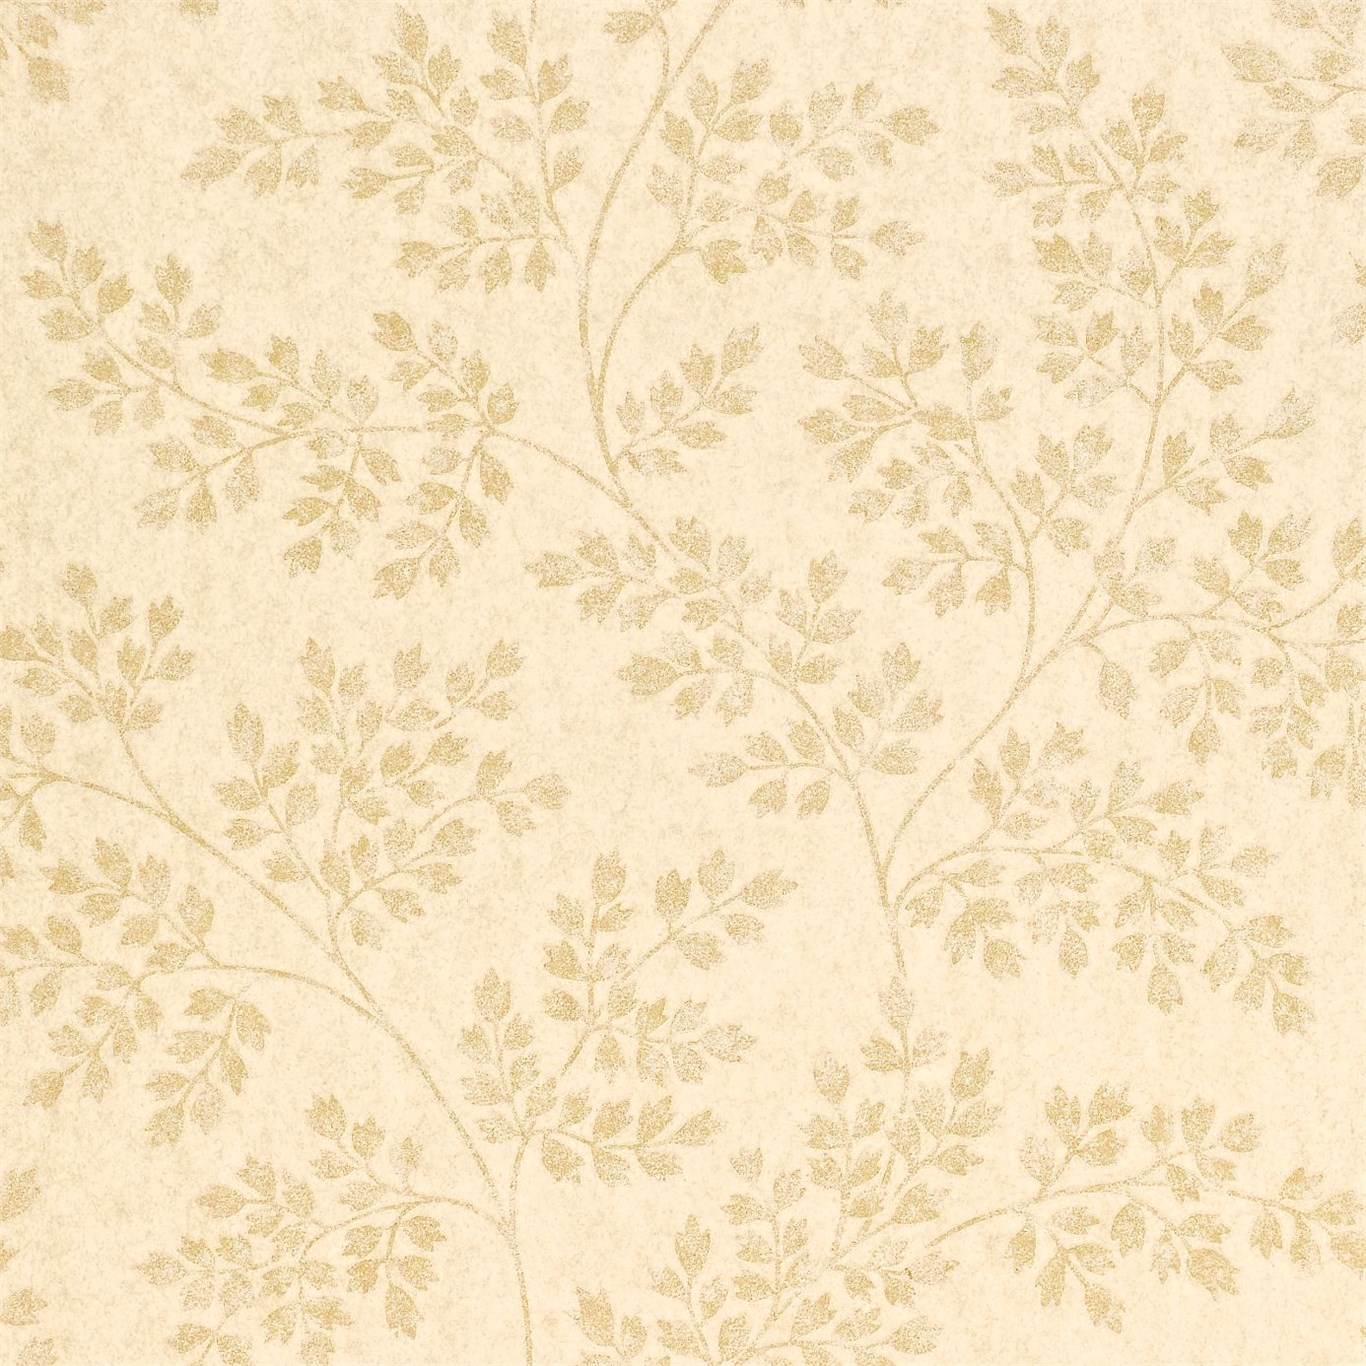 Wallpaper - Sanderson Caverley Wallpapers Coralie Cream/Sand